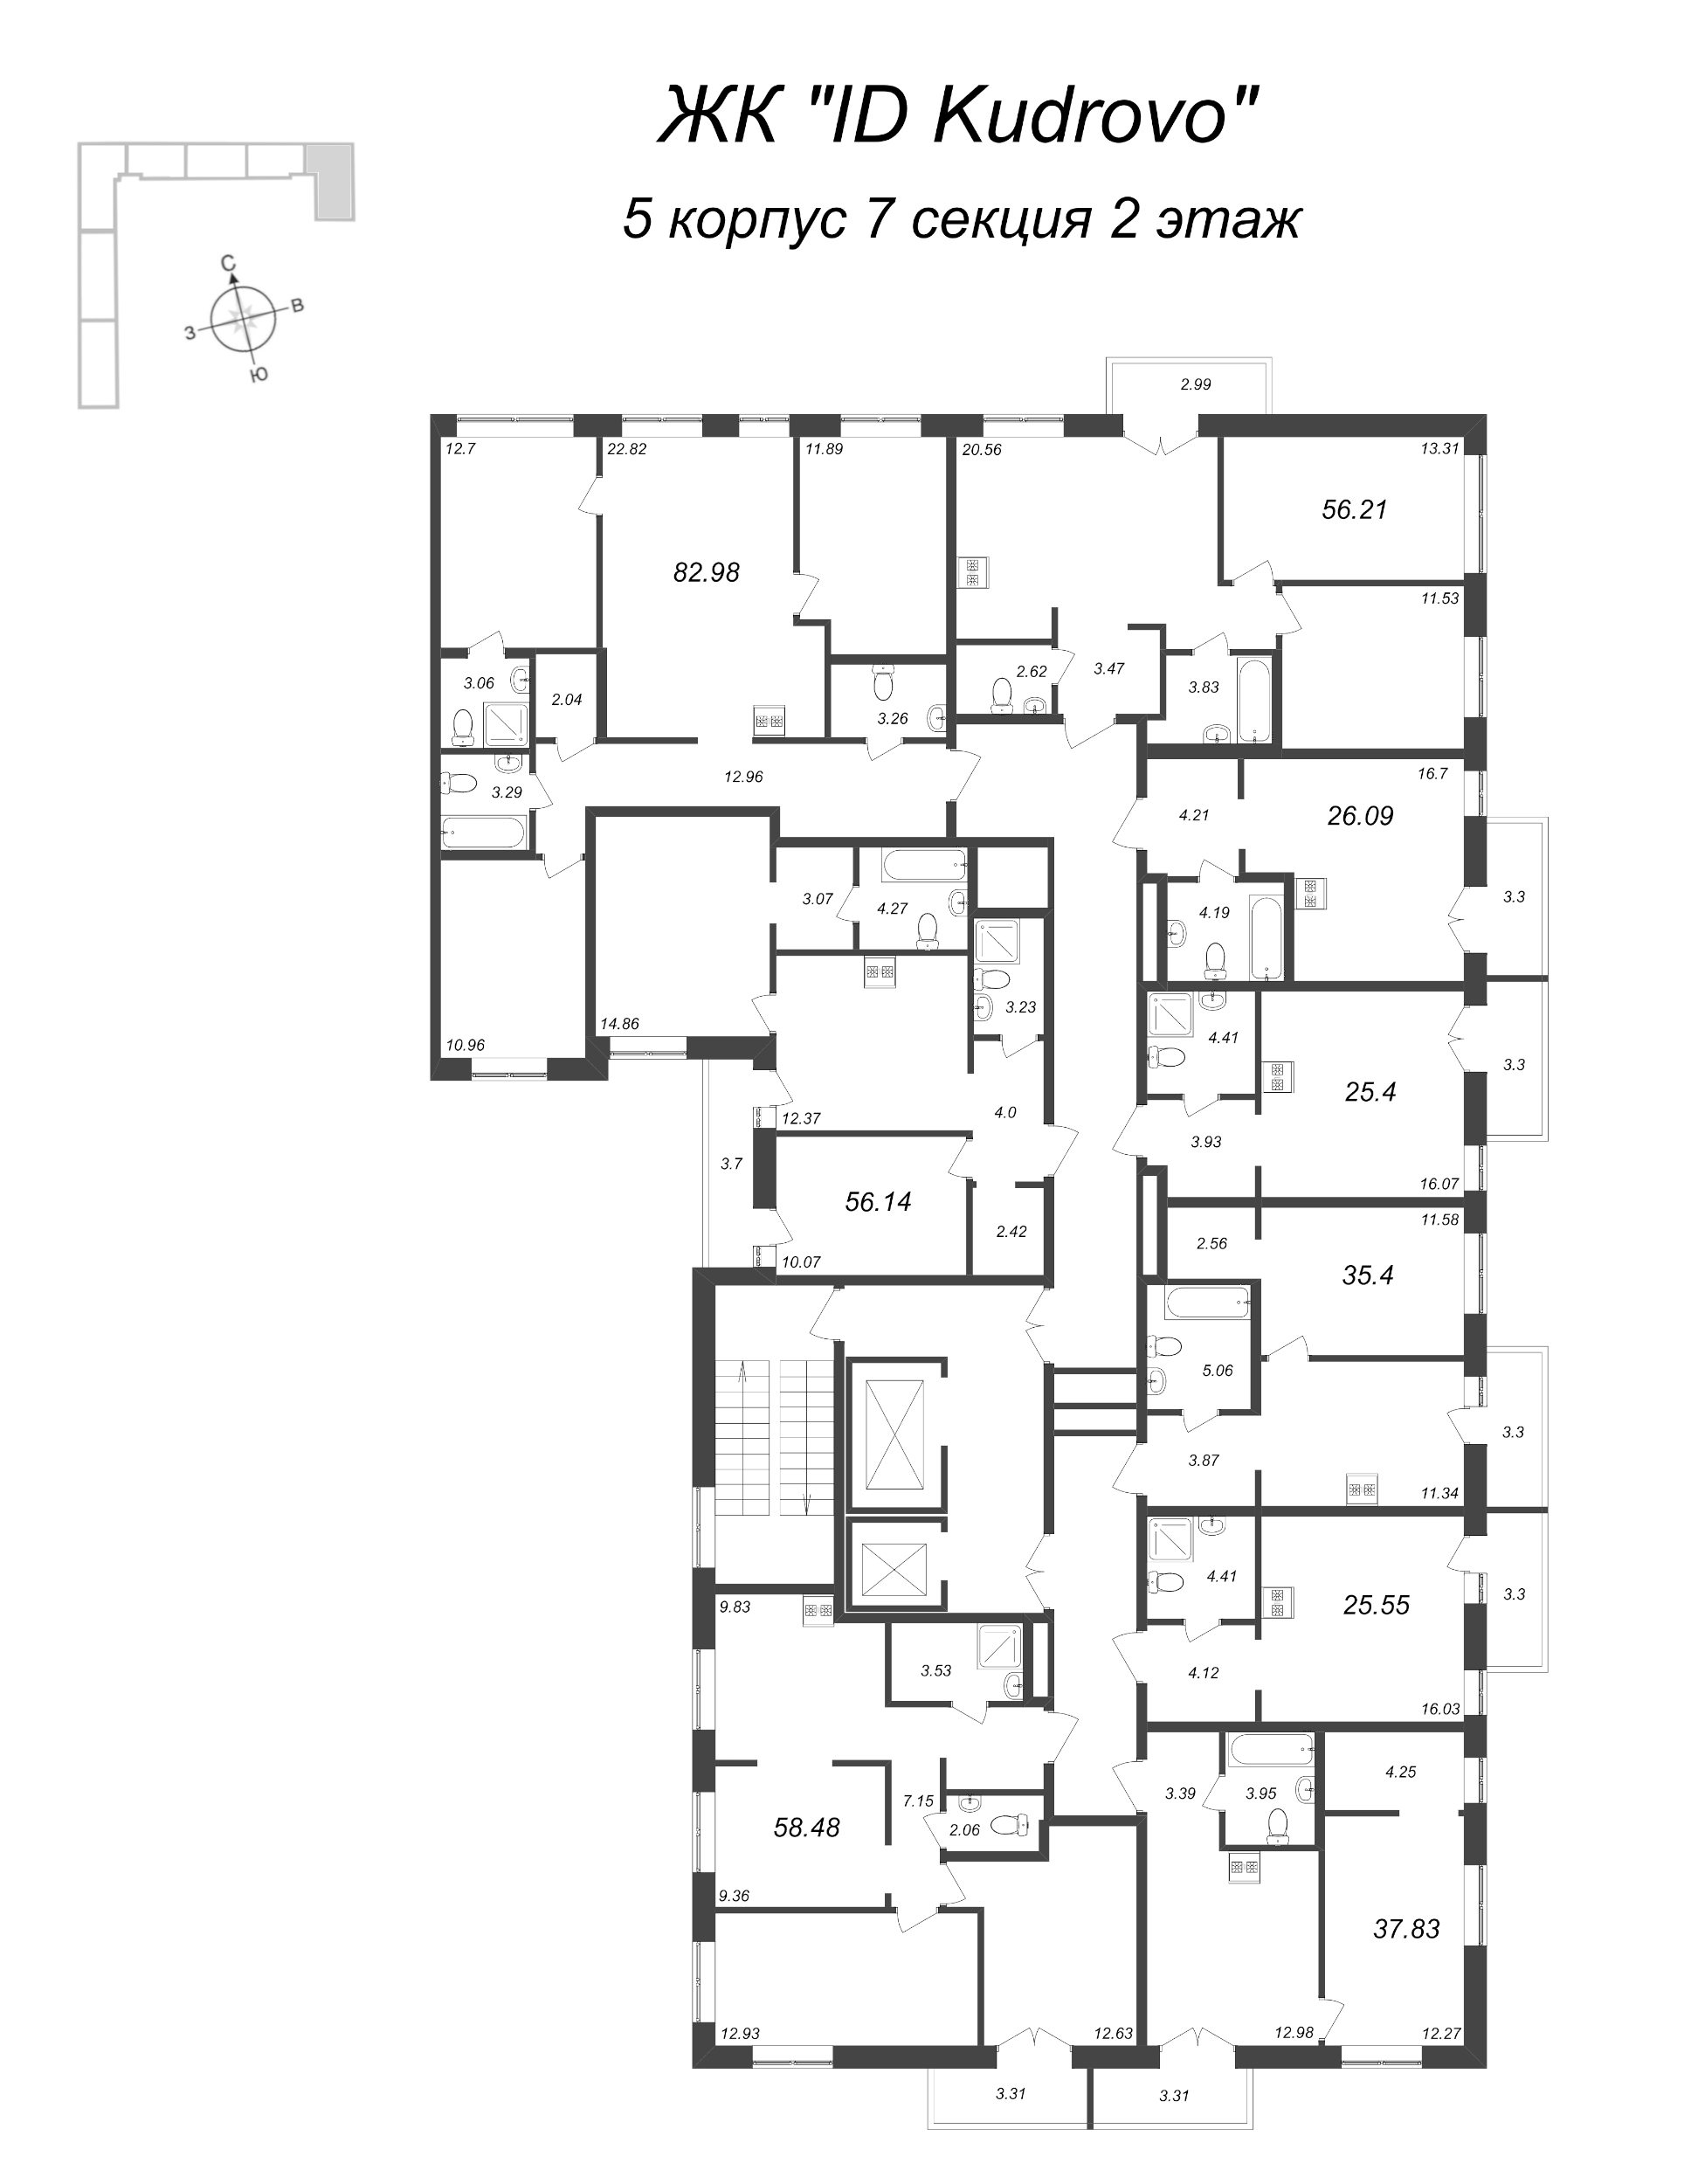 4-комнатная (Евро) квартира, 82.98 м² в ЖК "ID Kudrovo" - планировка этажа